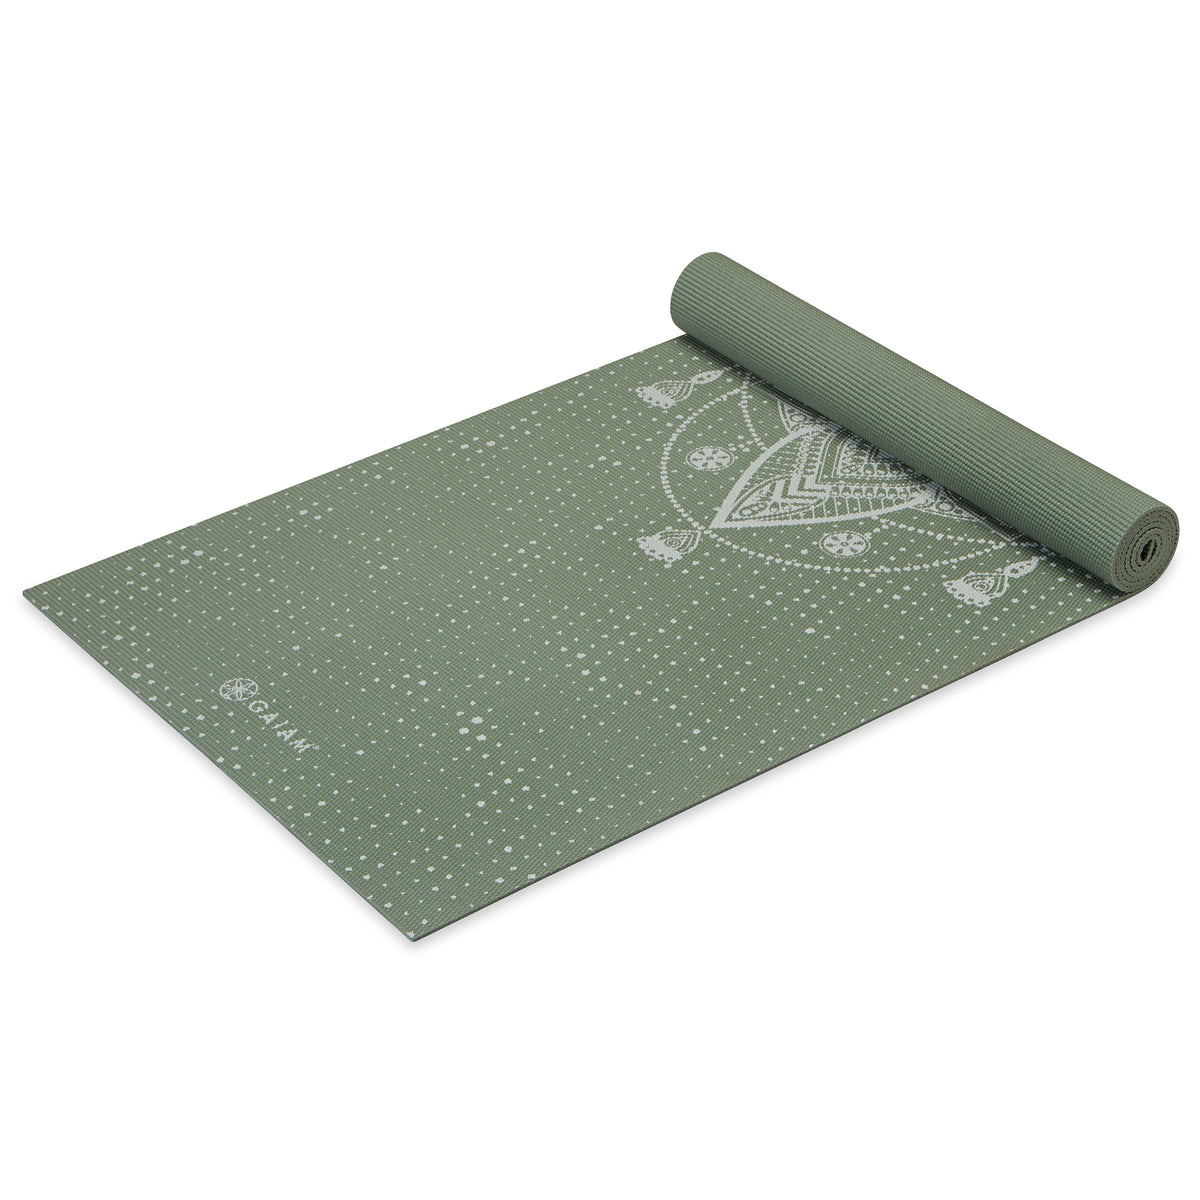 Gaiam Gaiam Celestial Green Yoga Mat 5mm Classic Printed - Sports Equipment